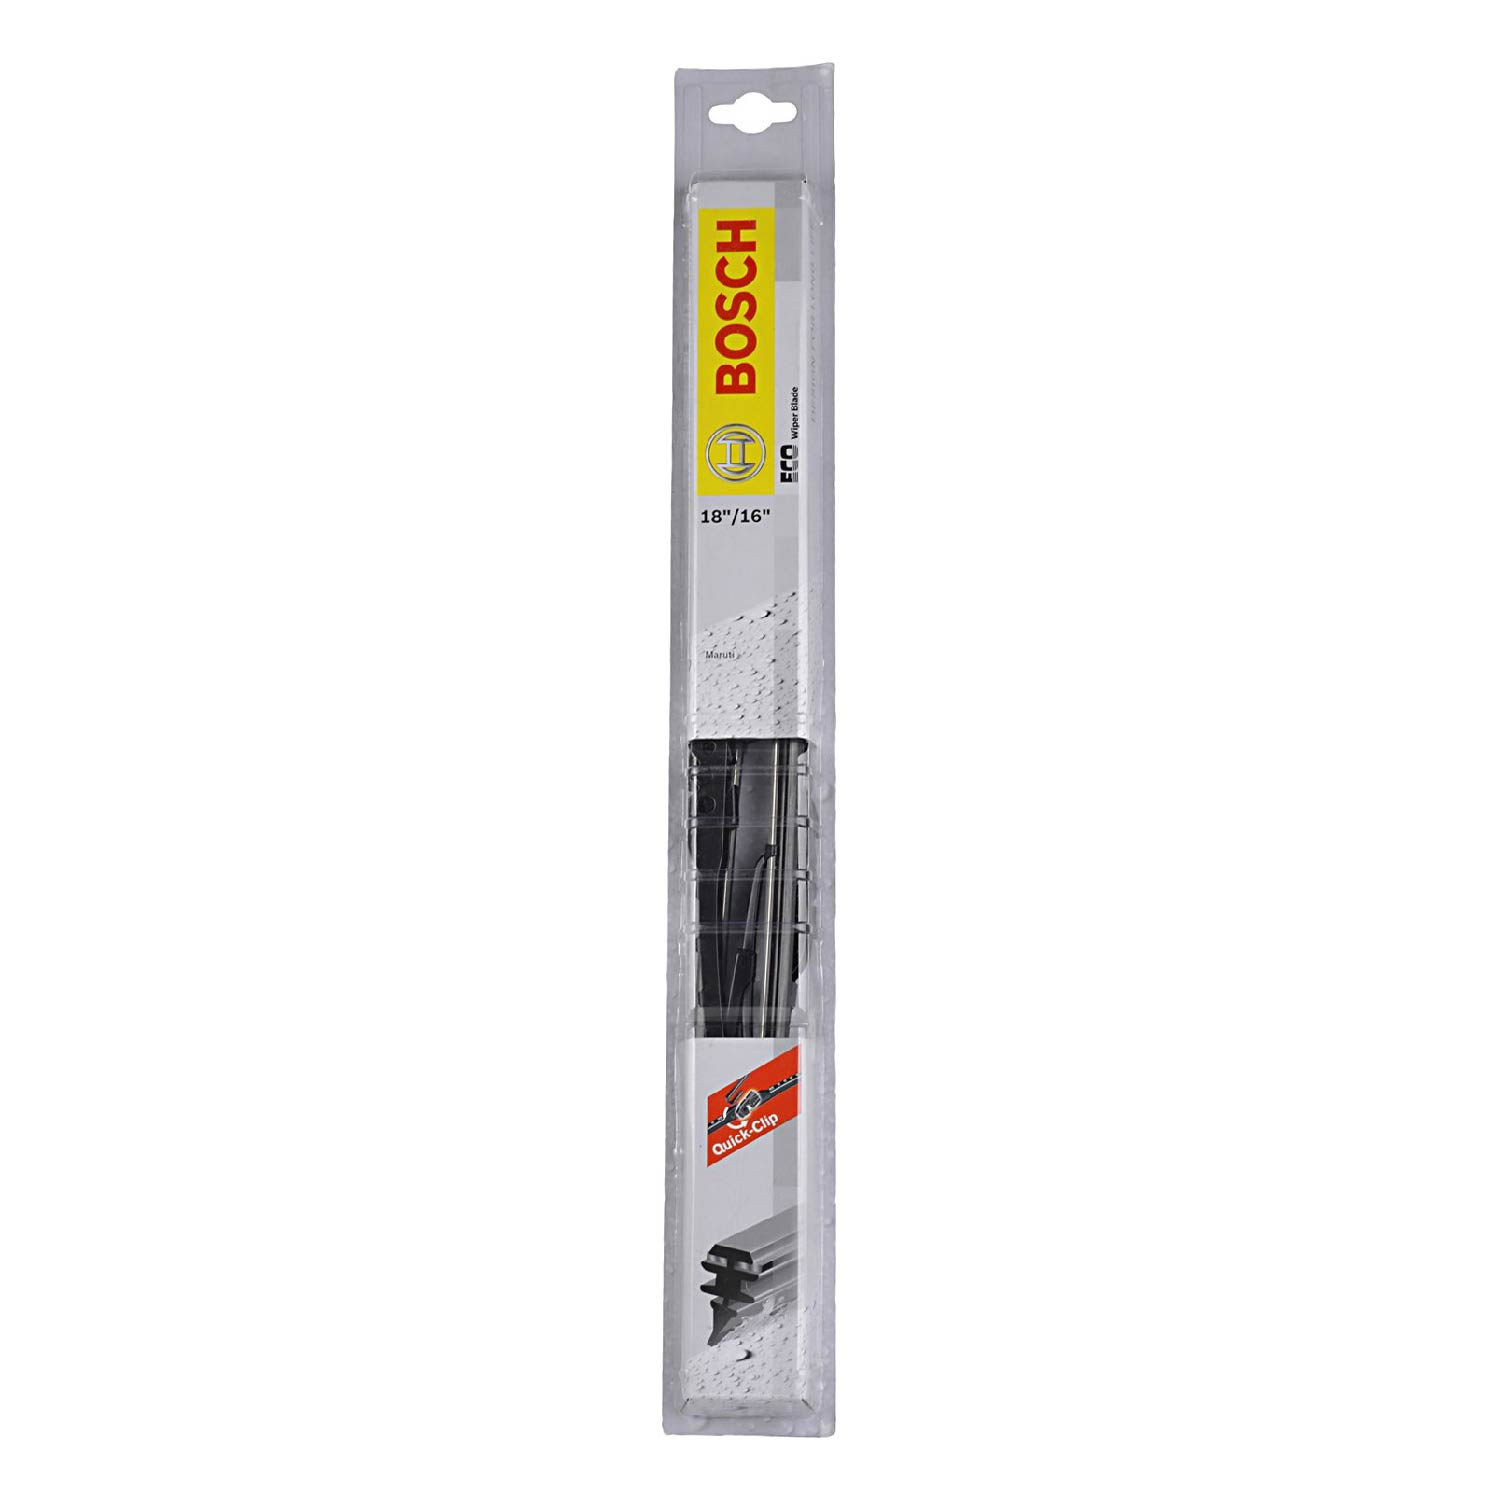 Bosch 3397010054 High Performance Replacement Wiper Blade, 18"/16" (Set of 2)